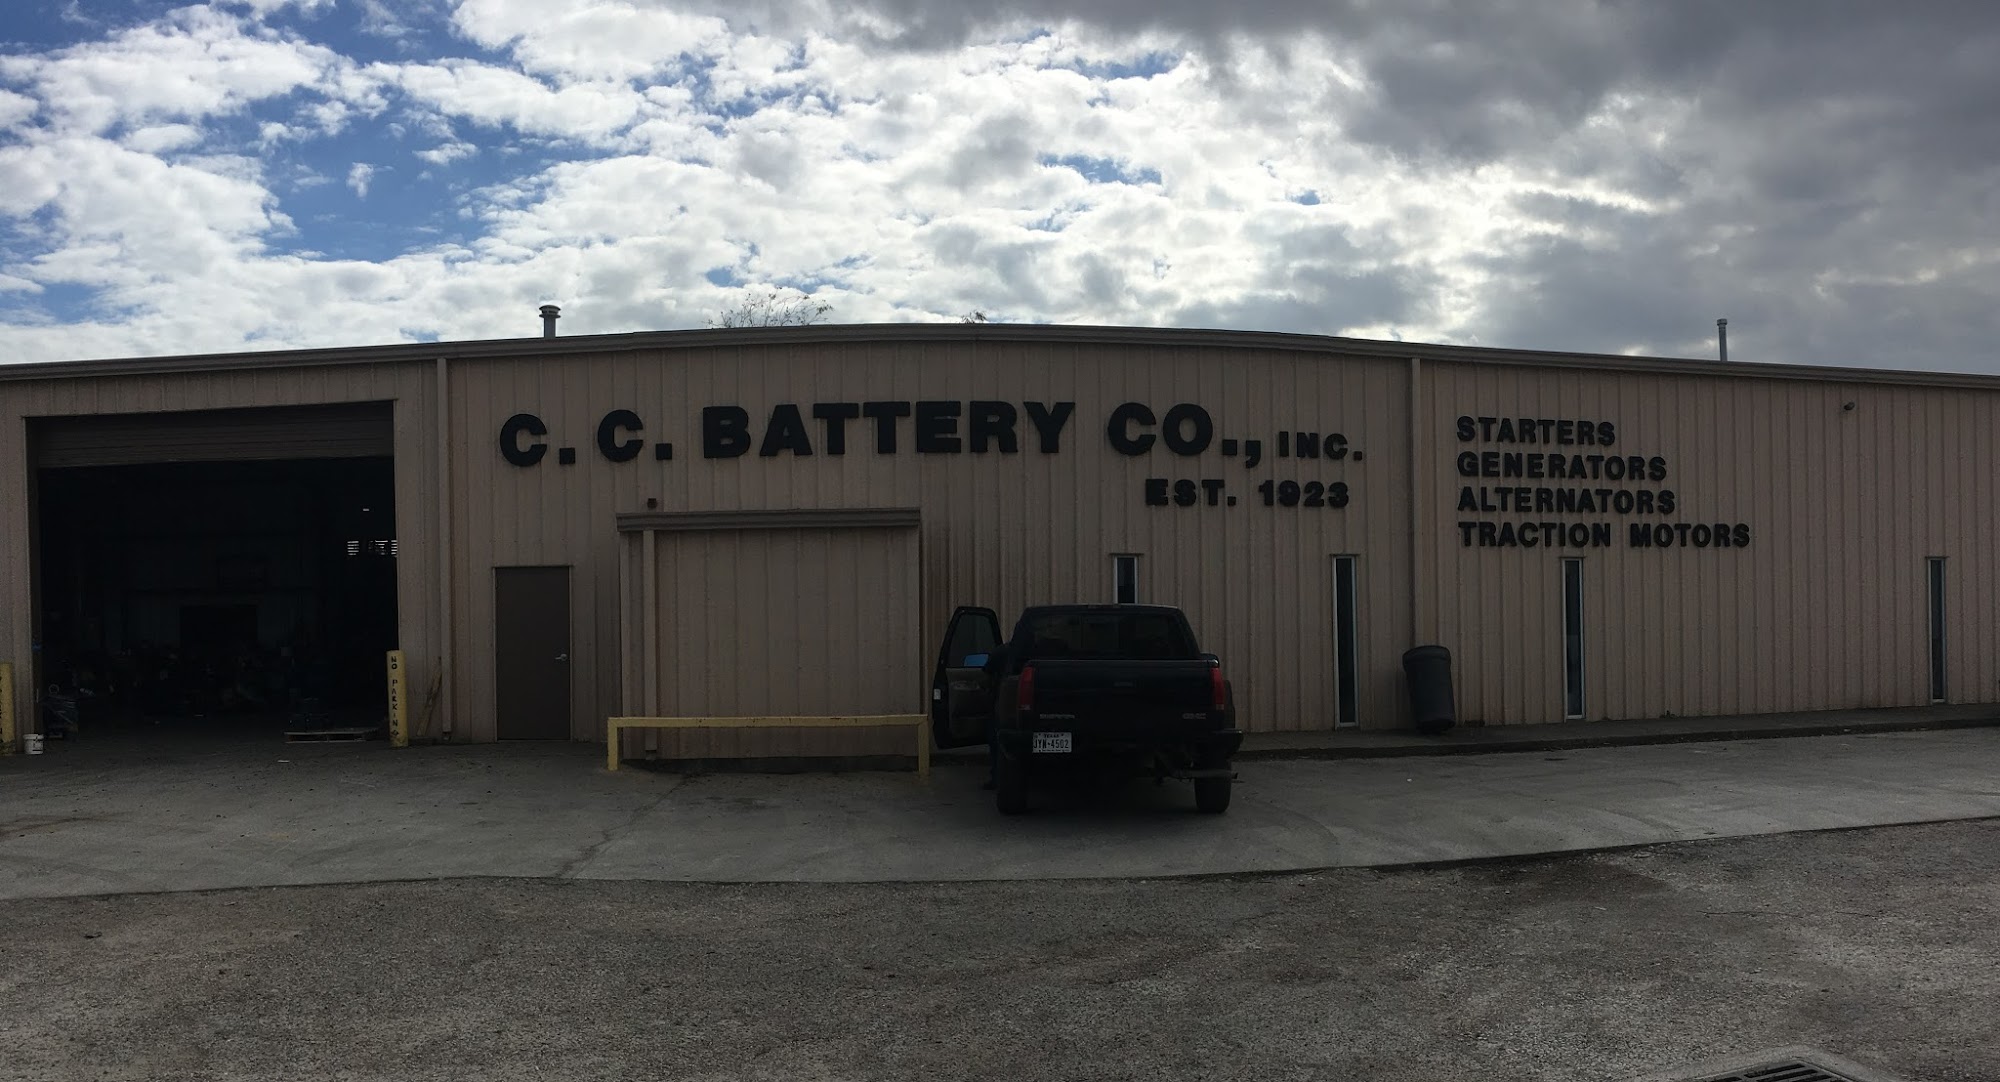 C. C. Battery Company, Inc.